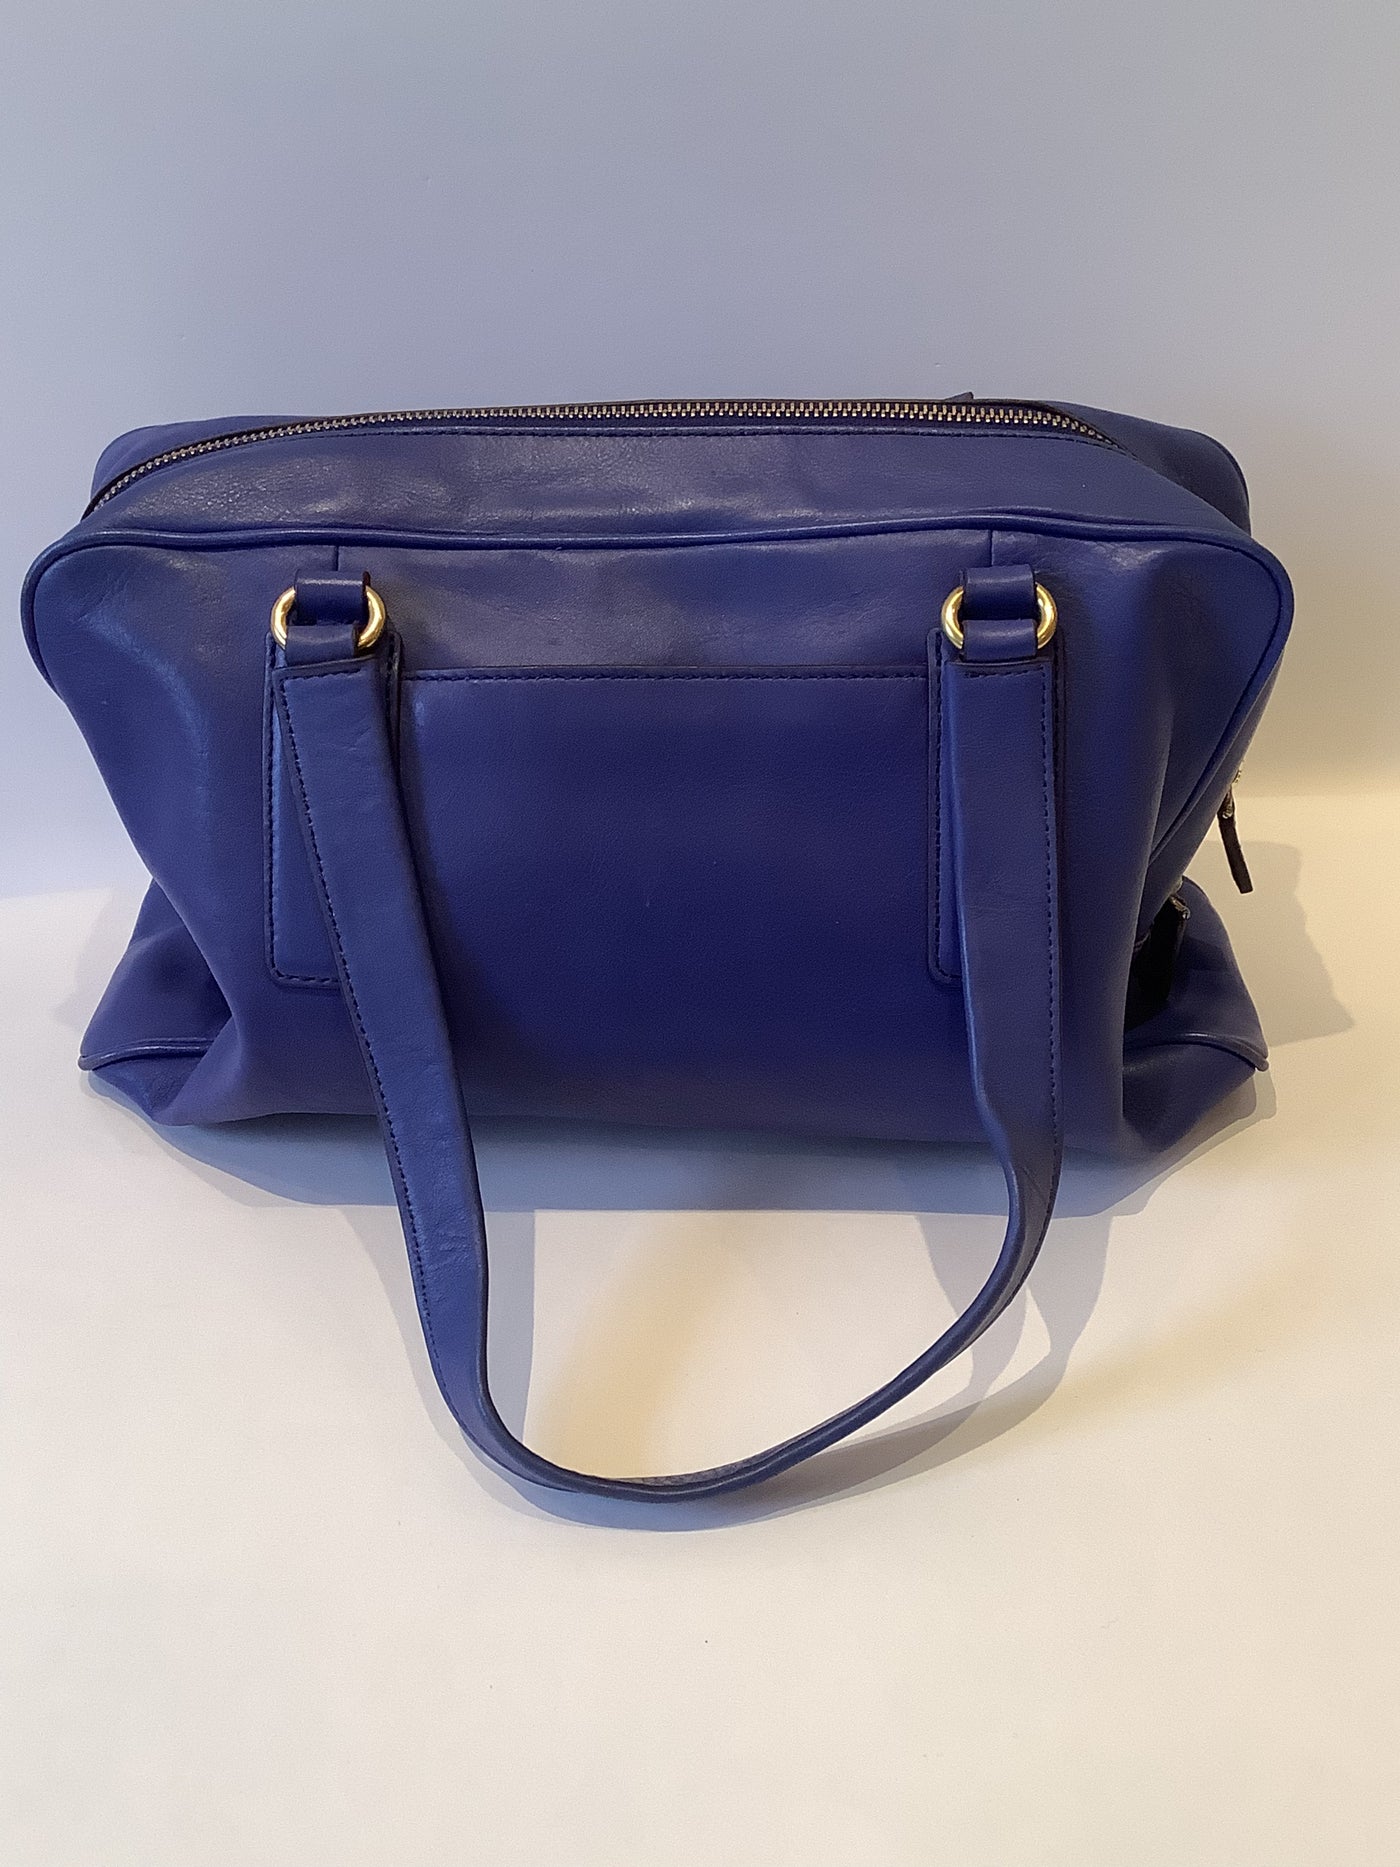 Fossil Indigo Blue Leather Handbag